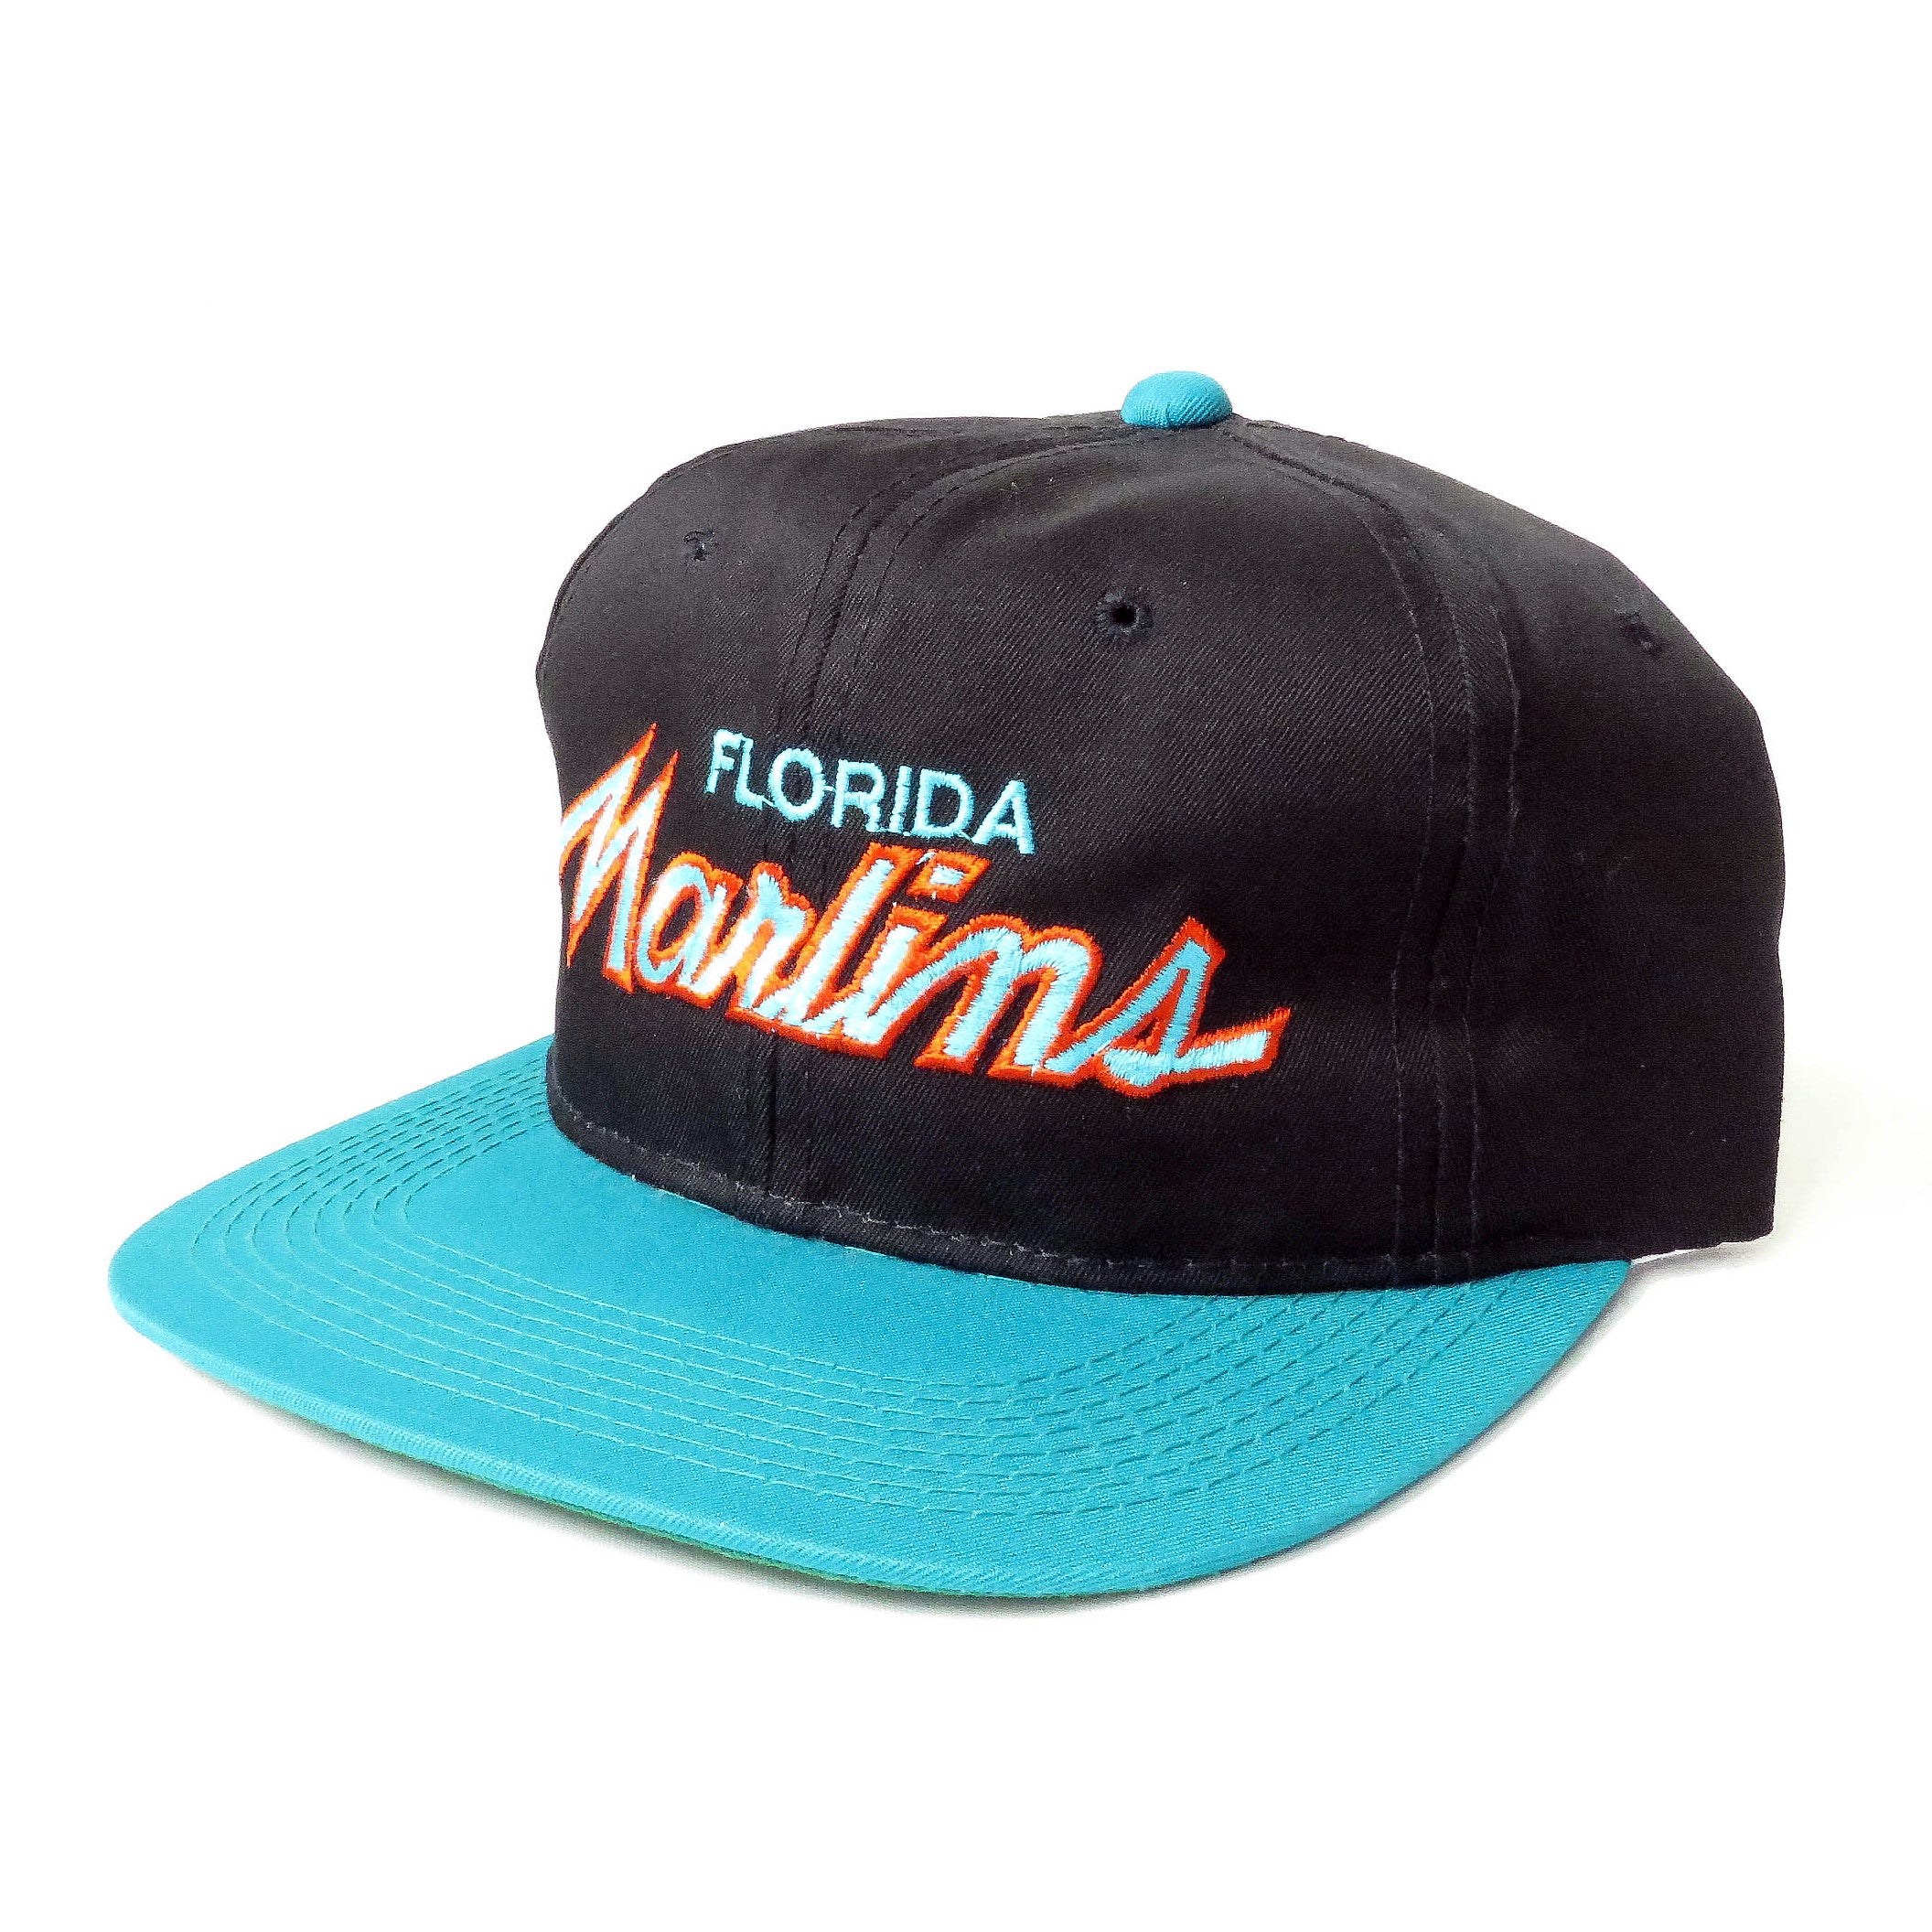 Vintage Florida Marlins Sports Specialties Script Snapback Hat